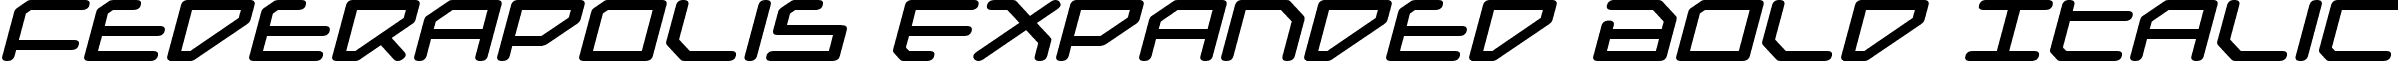 Federapolis Expanded Bold Italic font - federapolisebi.ttf